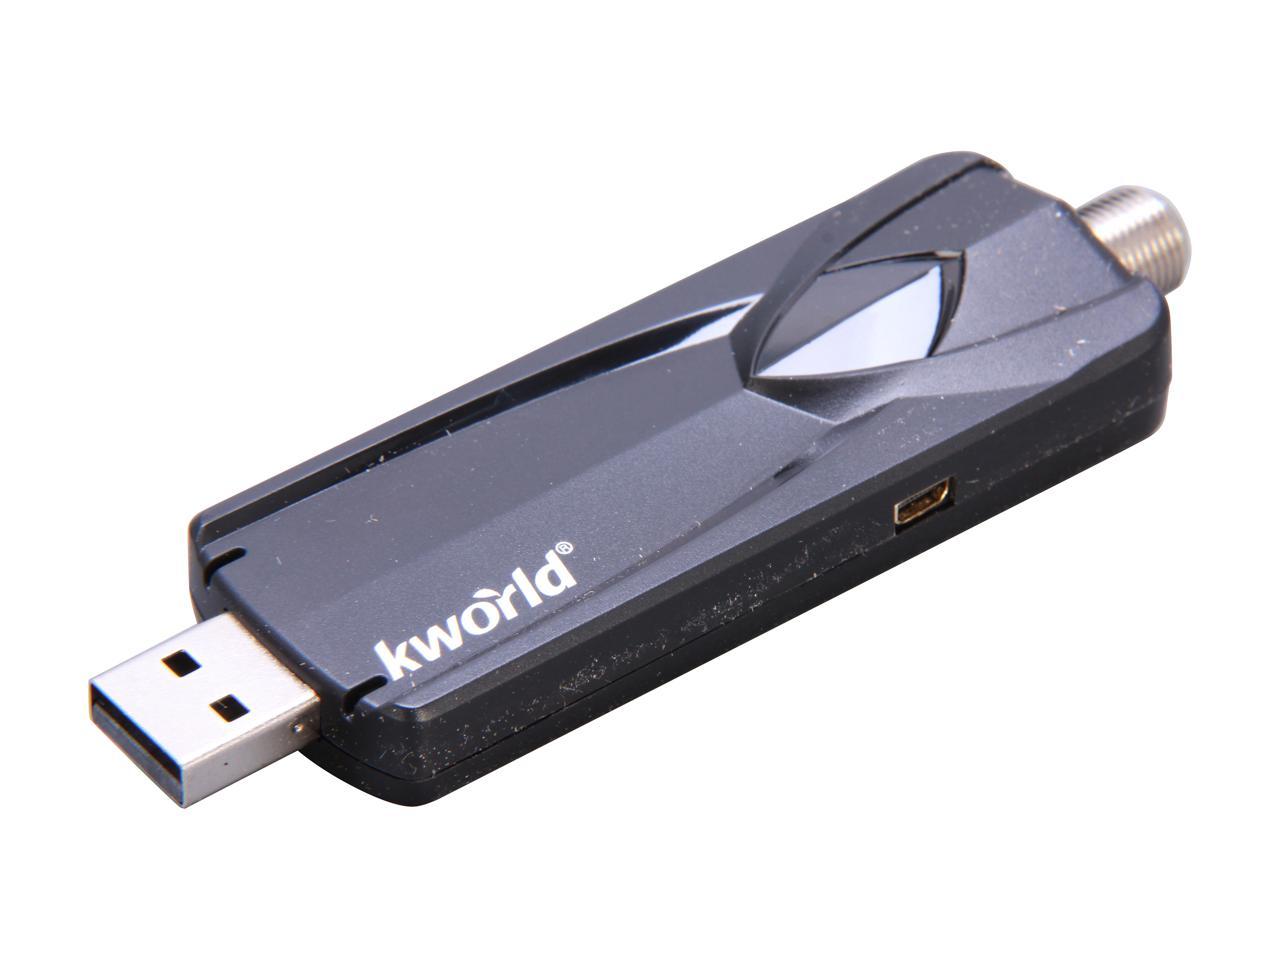 Hybrid tv stick. TV-тюнер KWORLD USB Analog TV Stick III. KWORLD тюнер. TV-тюнер KWORLD USB Hybrid TV Stick. Eztv-Dual DVB-T Hybrid TV Stick драйвер.